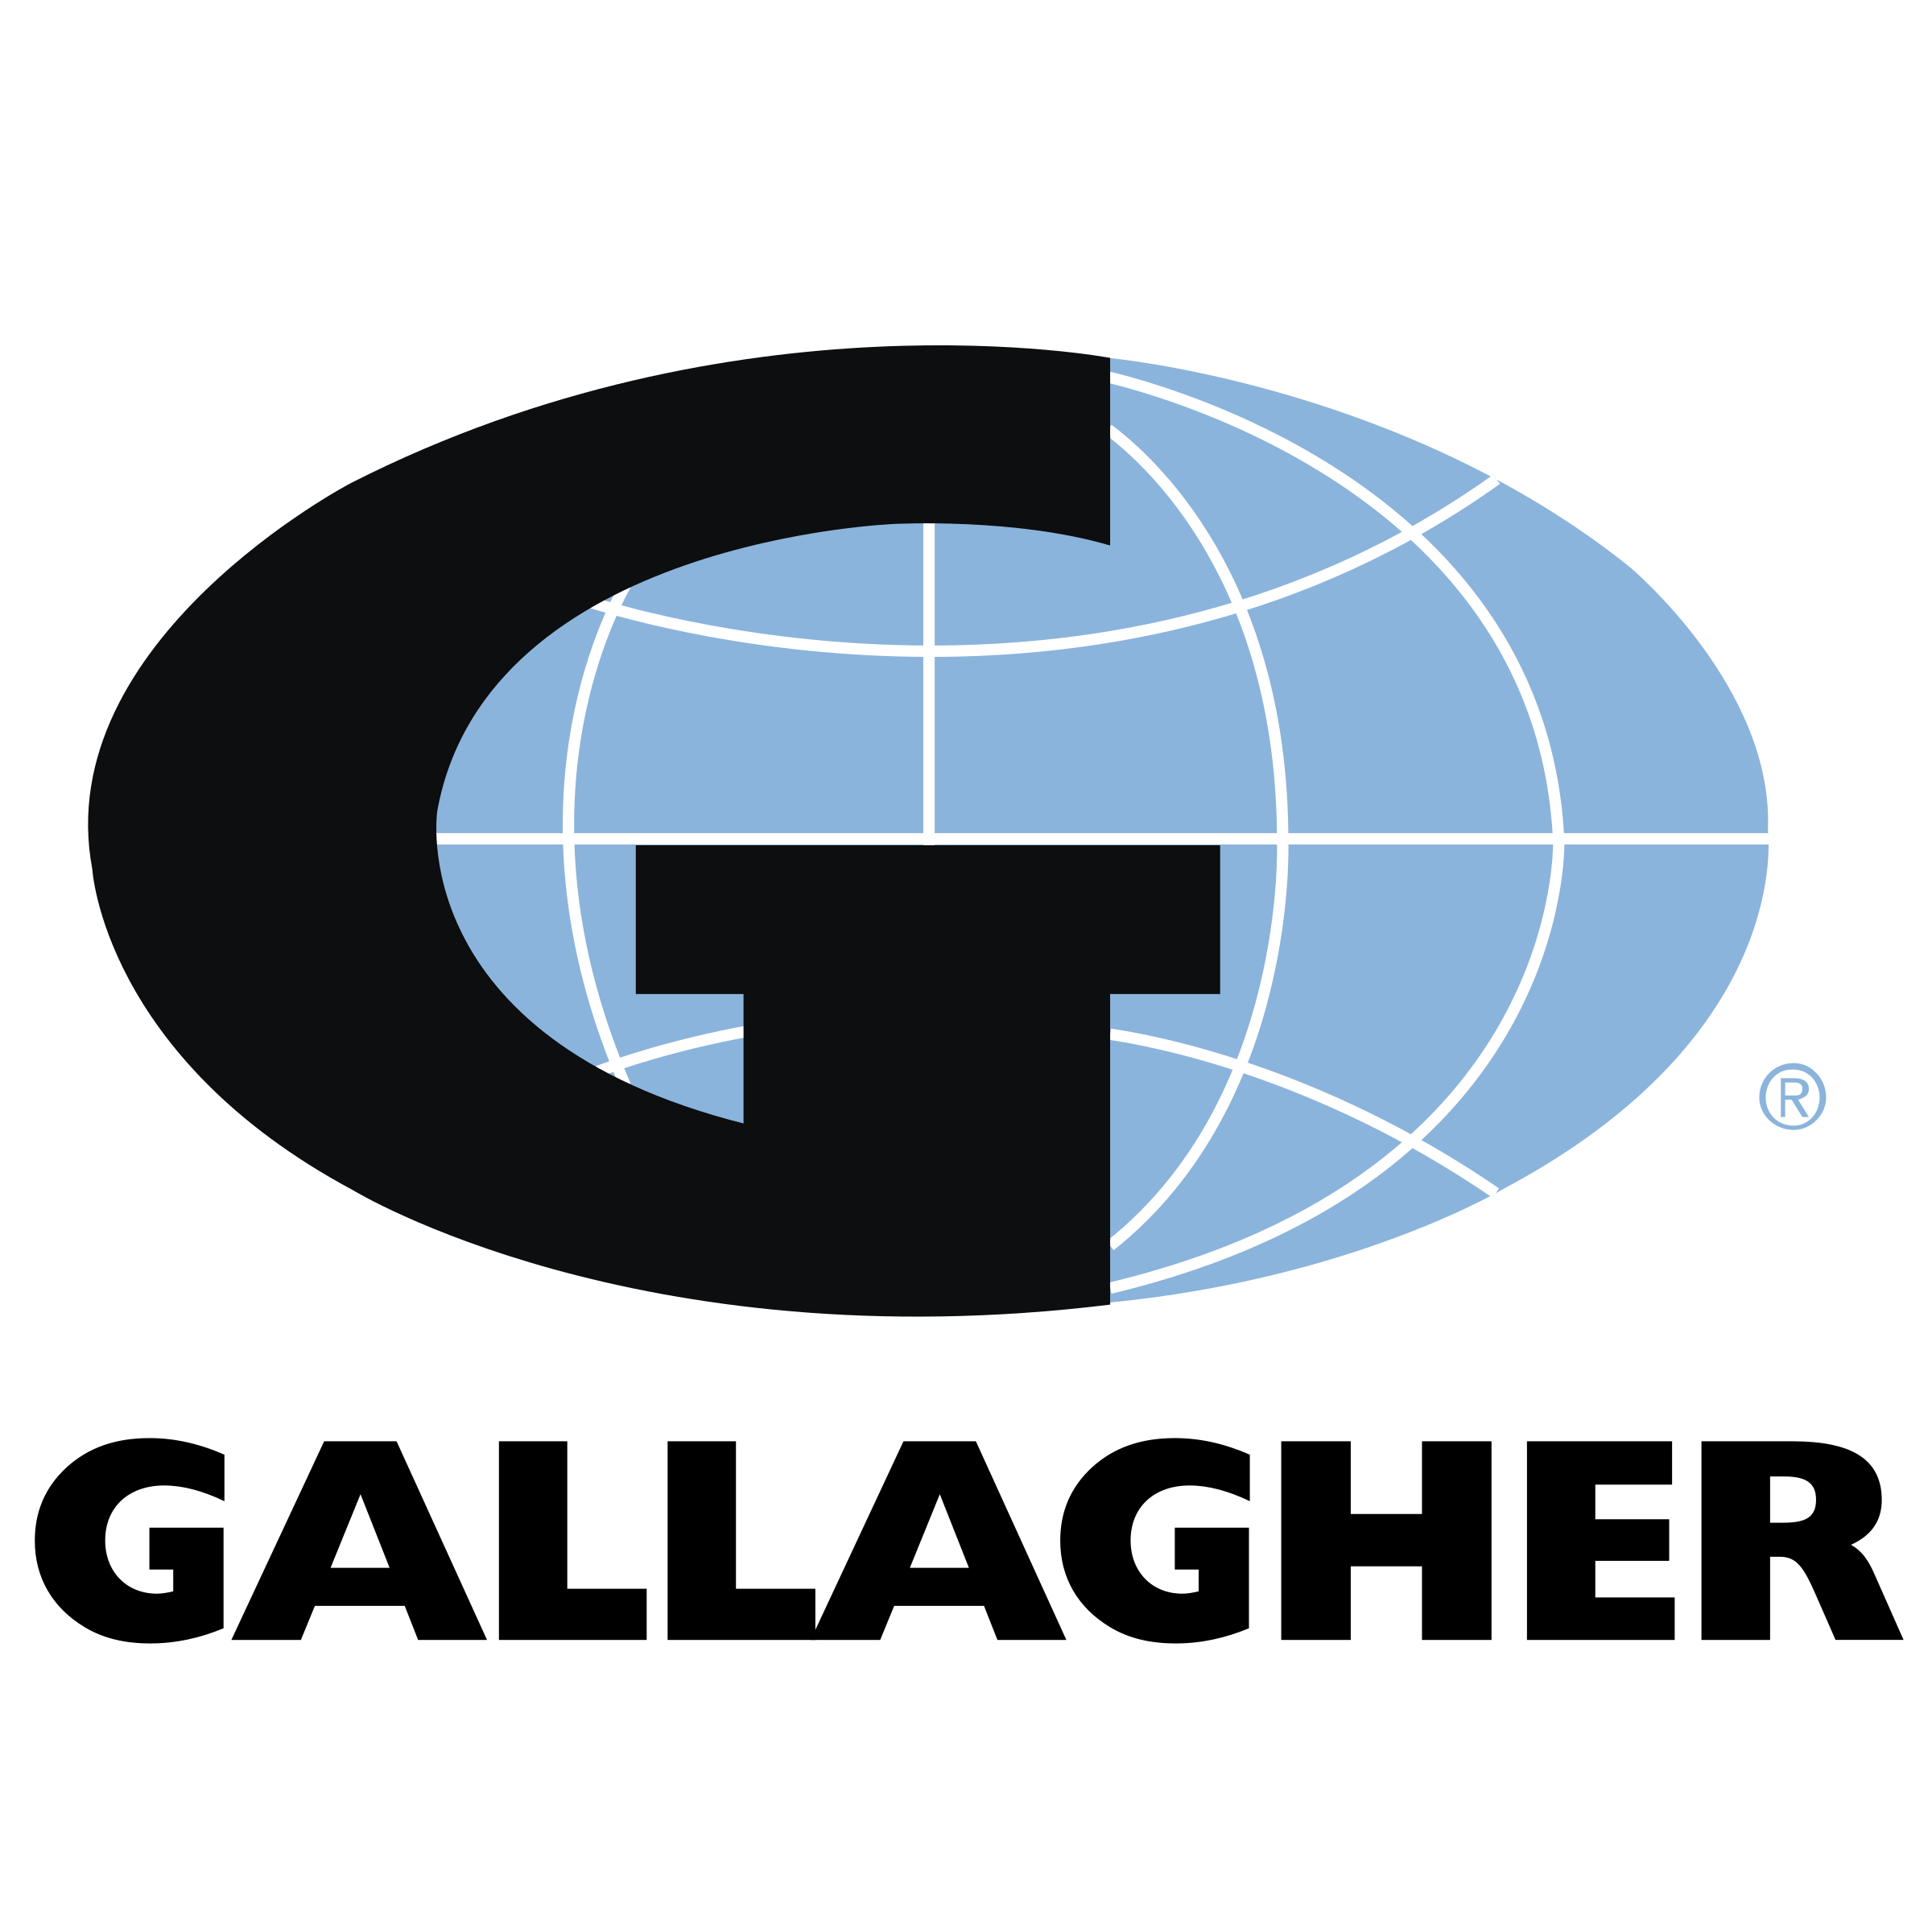 Gallagher Logo - Gallagher Logo PNG Transparent & SVG Vector - Freebie Supply